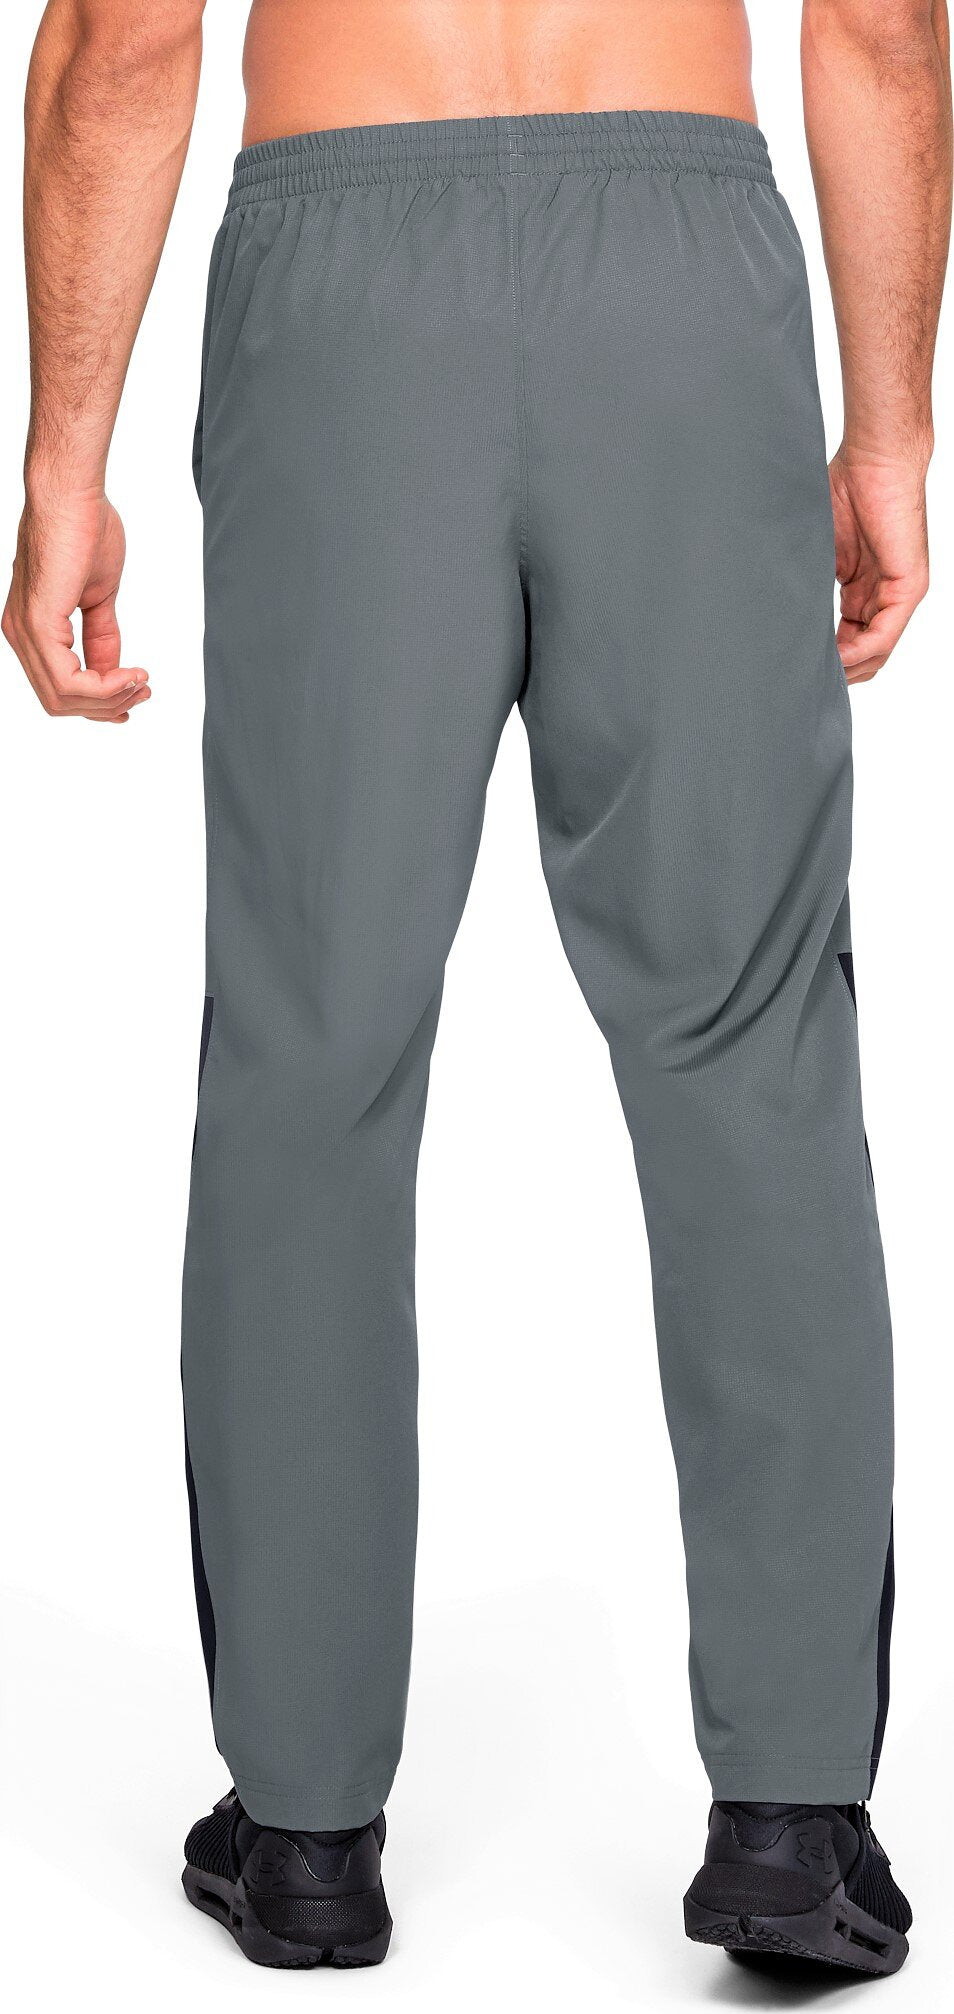 UNDERARMO Vital Workout Pants - Men's